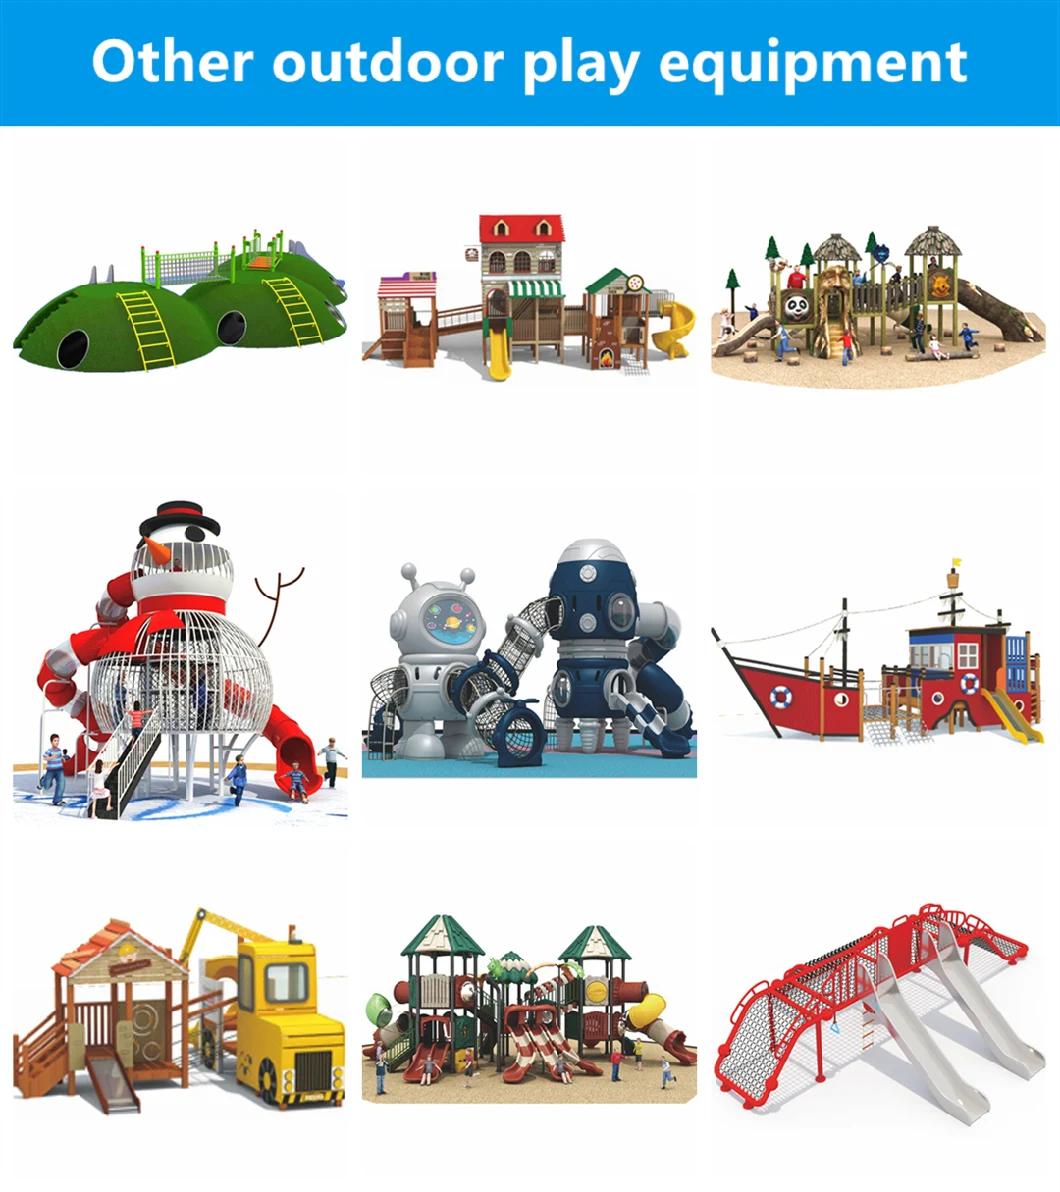 Kids Community Outdoor Playground Plastic Slide Park Sports Equipment Ym152